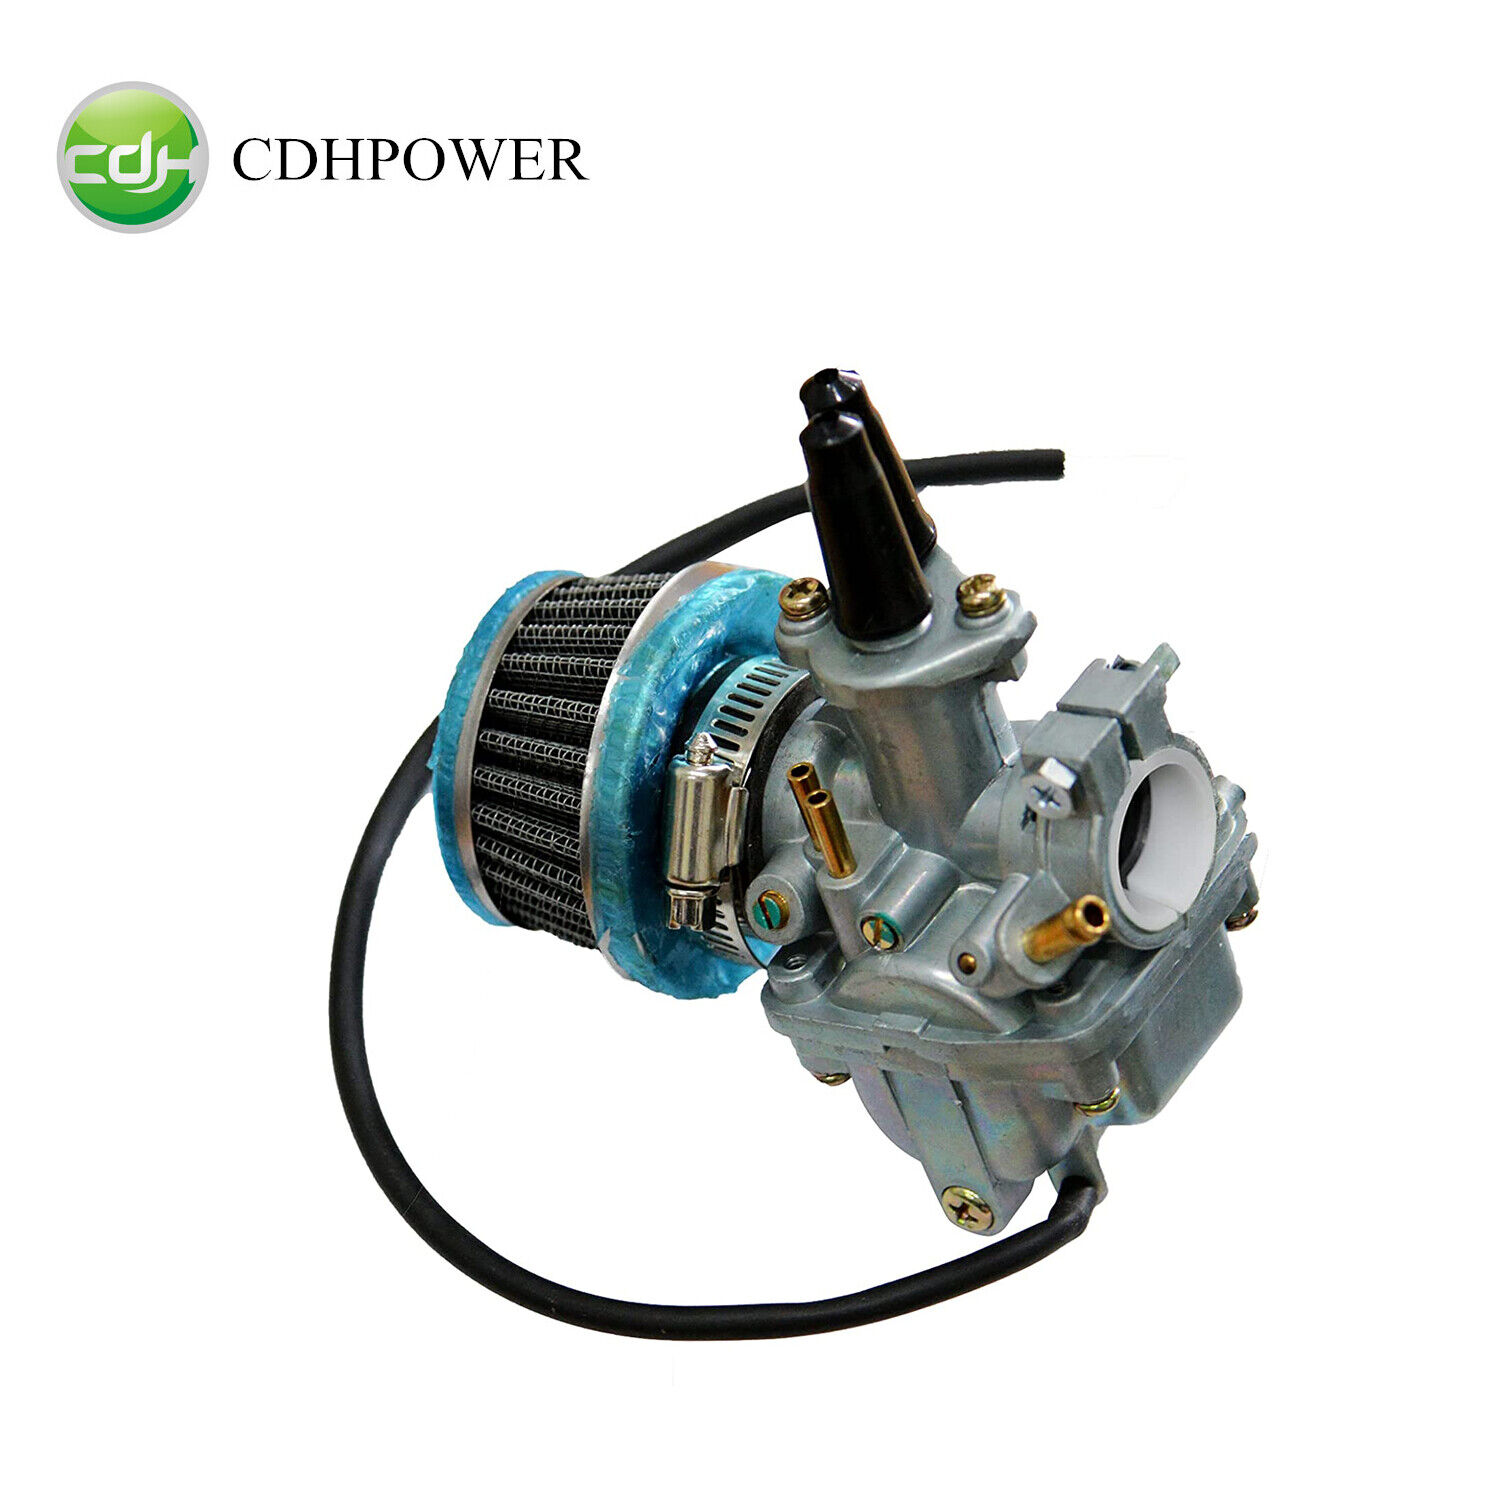 CDHPOWER High Performance Carburetor-2 Stroke Bicycle Engine Kit 48cc/66cc/80cc